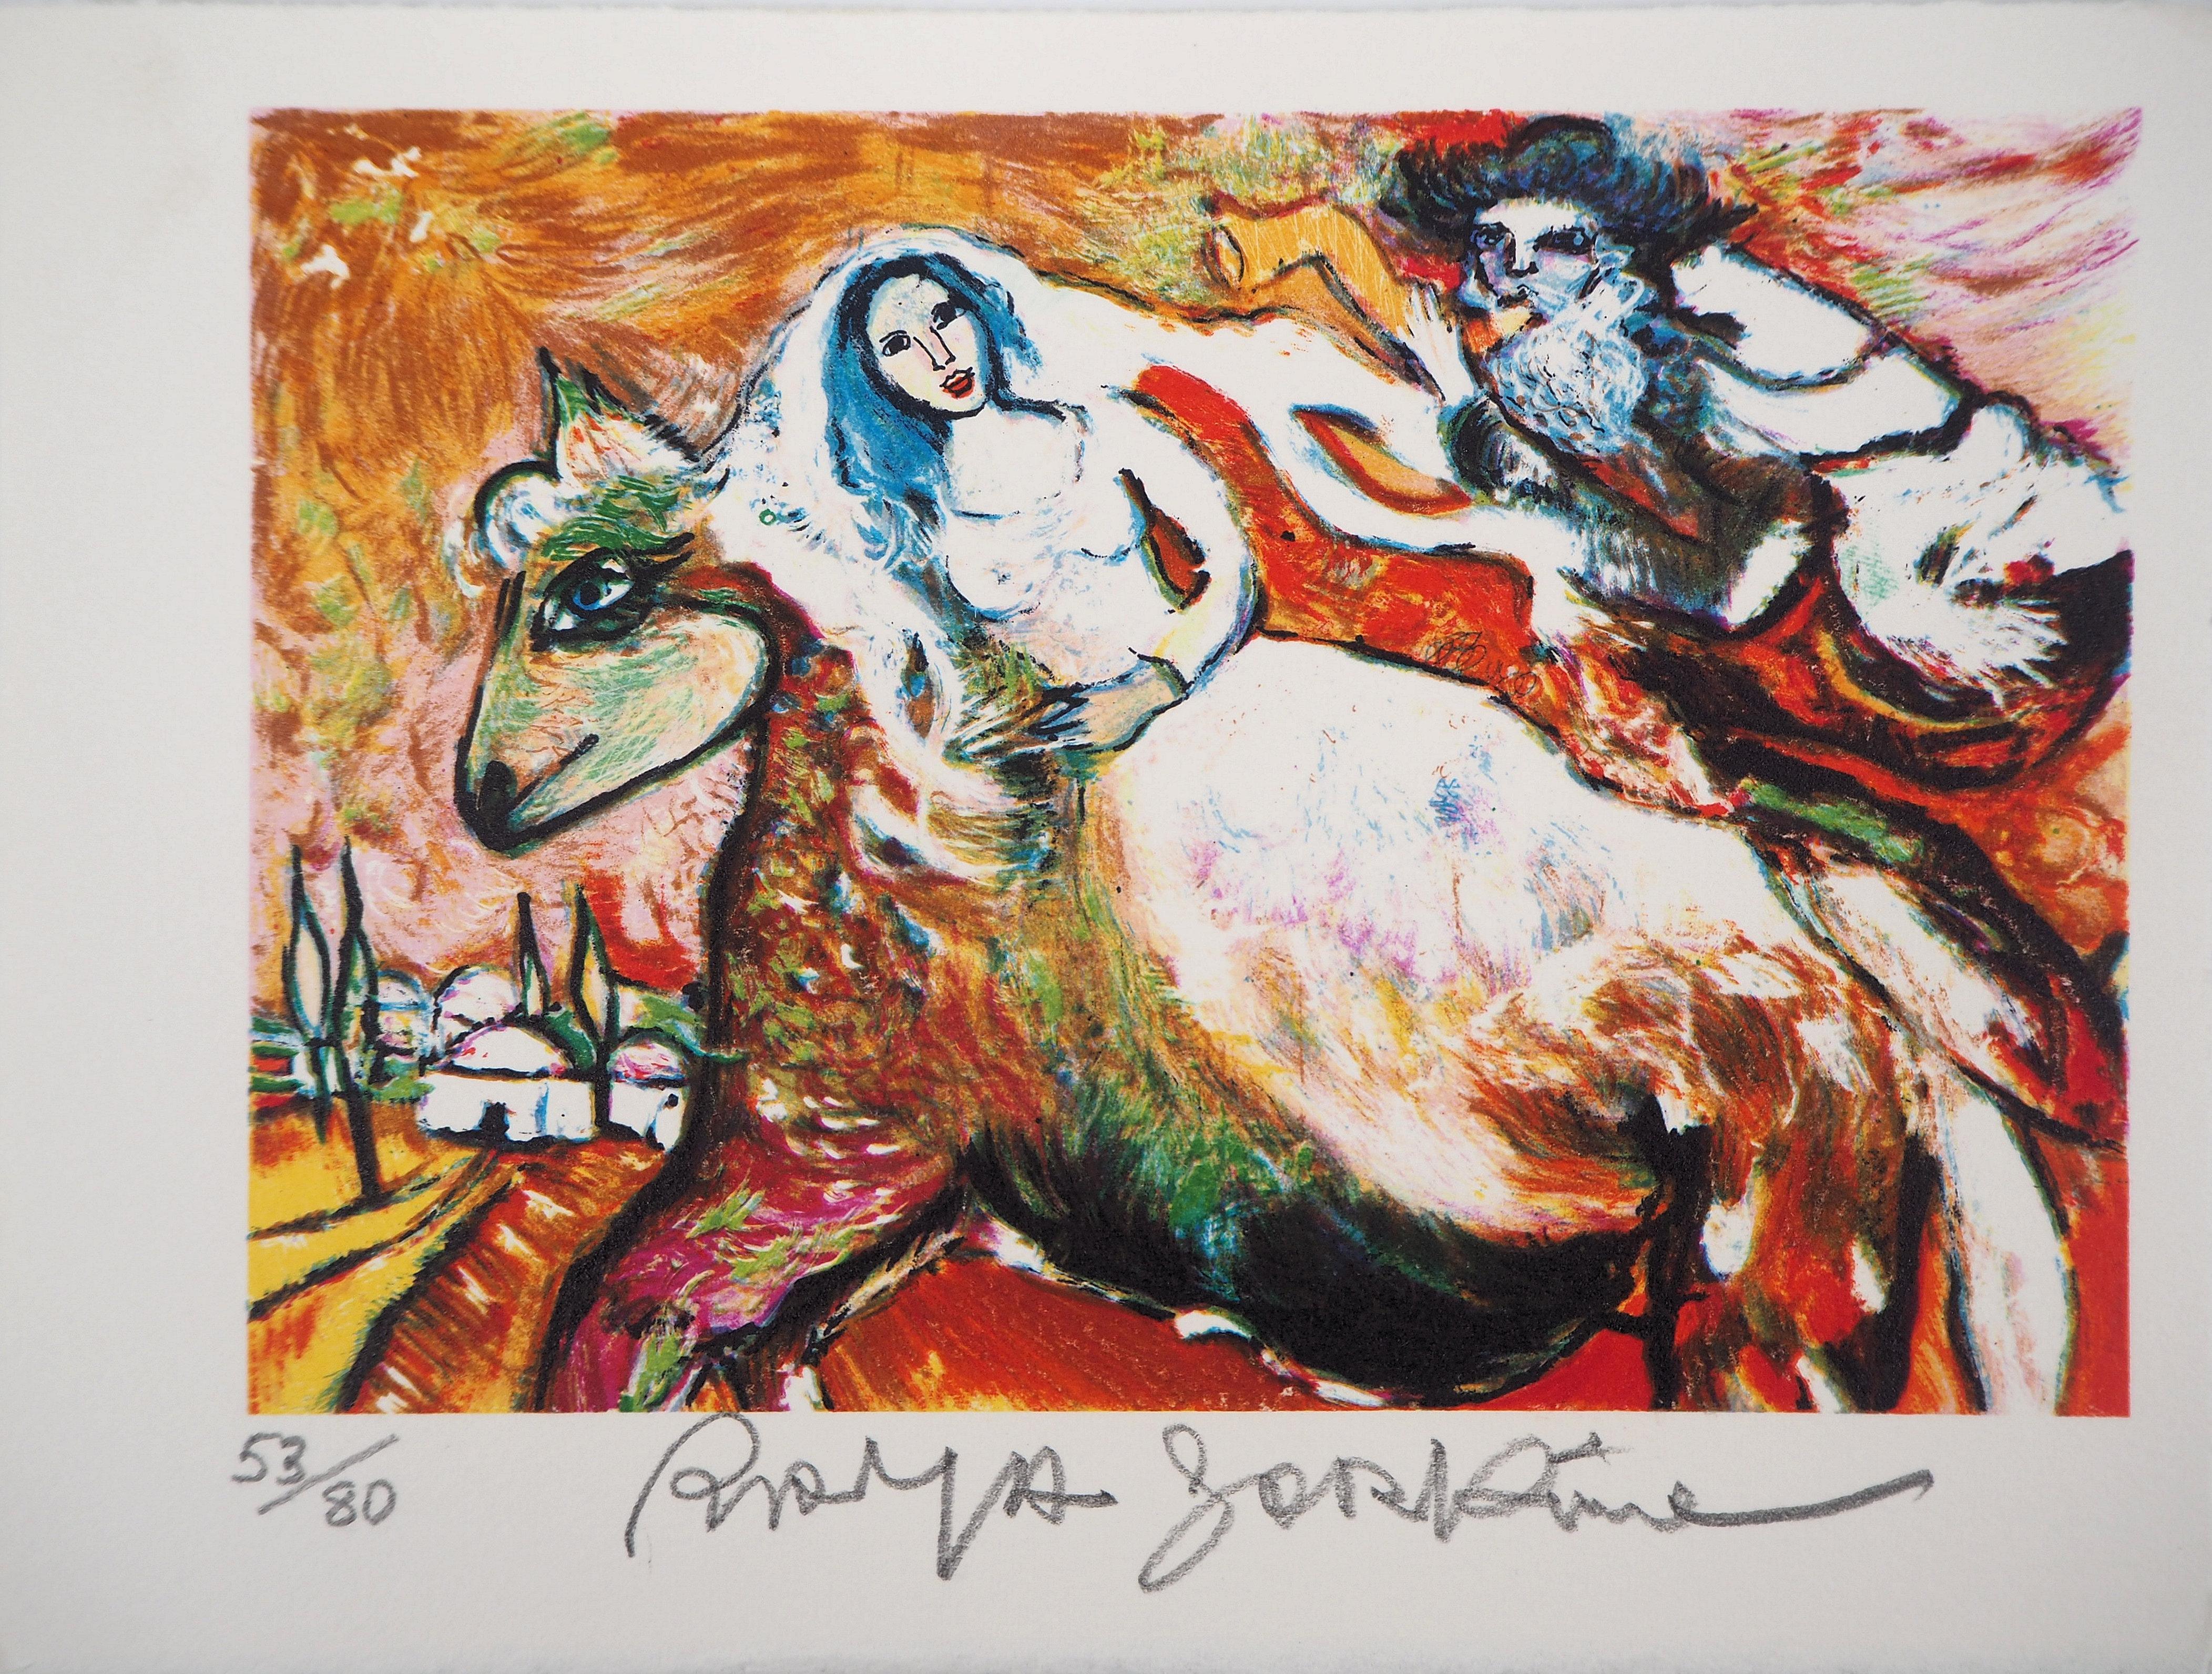 Alain Raya Sorkine Figurative Print - The Bride Horseriding- Original signed lithograph - 80 ex